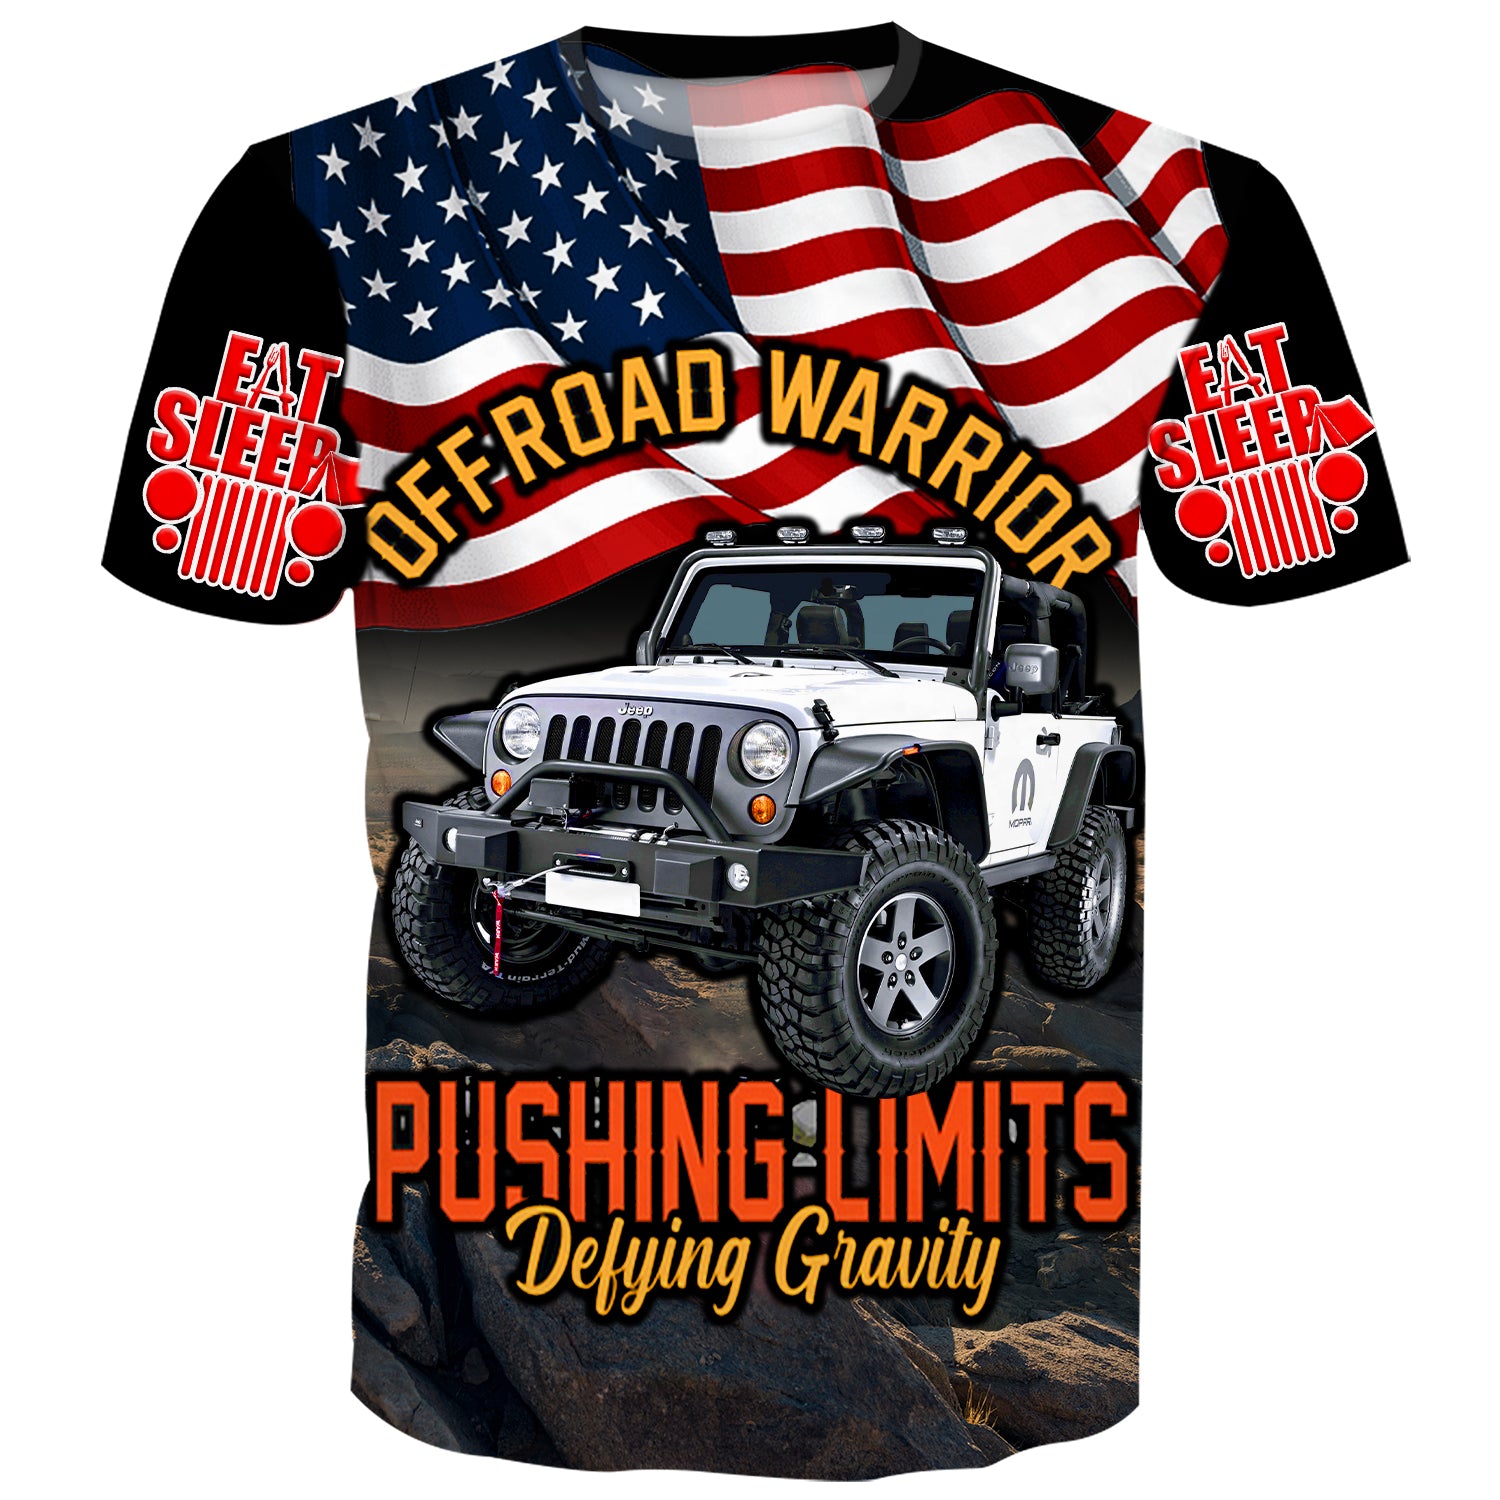 Offroad Warrior Pushing Limits Defying Gravity - Jeep T-Shirt